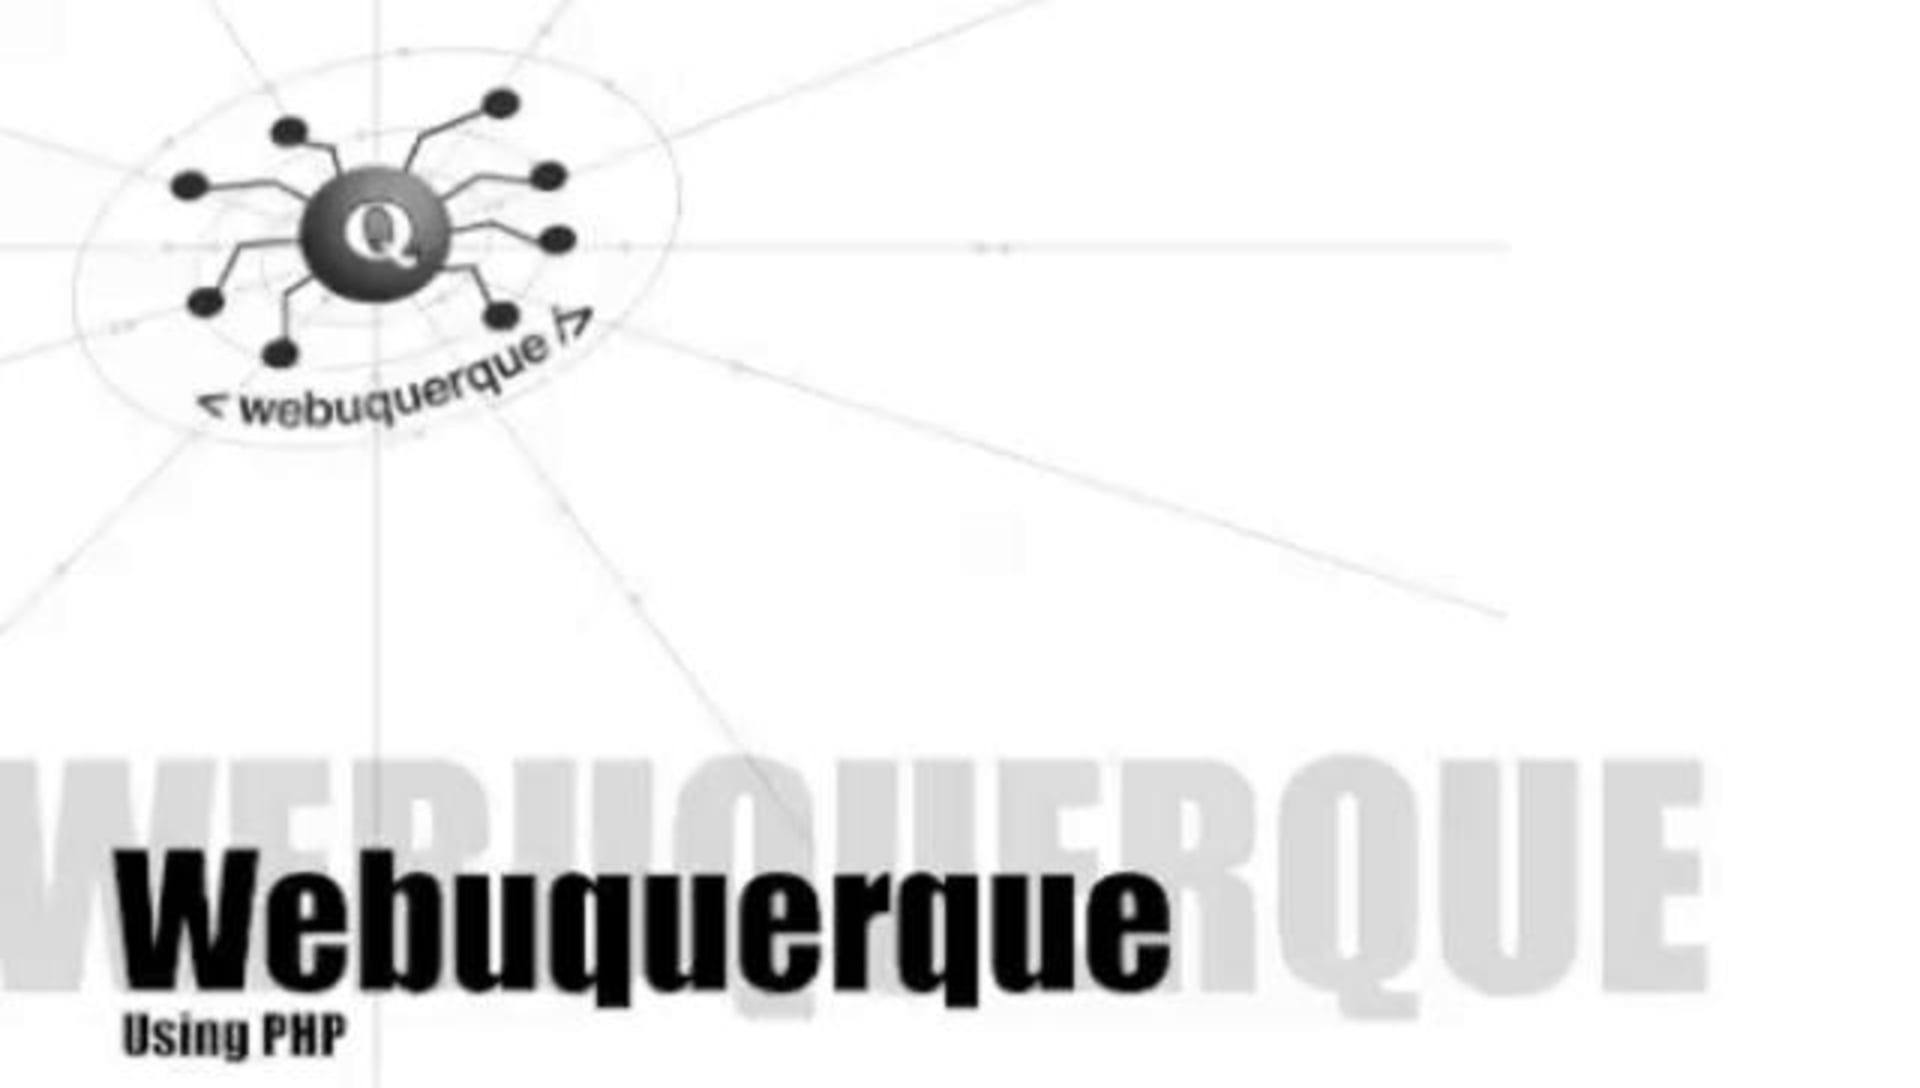 Webuquerque: Using PHP